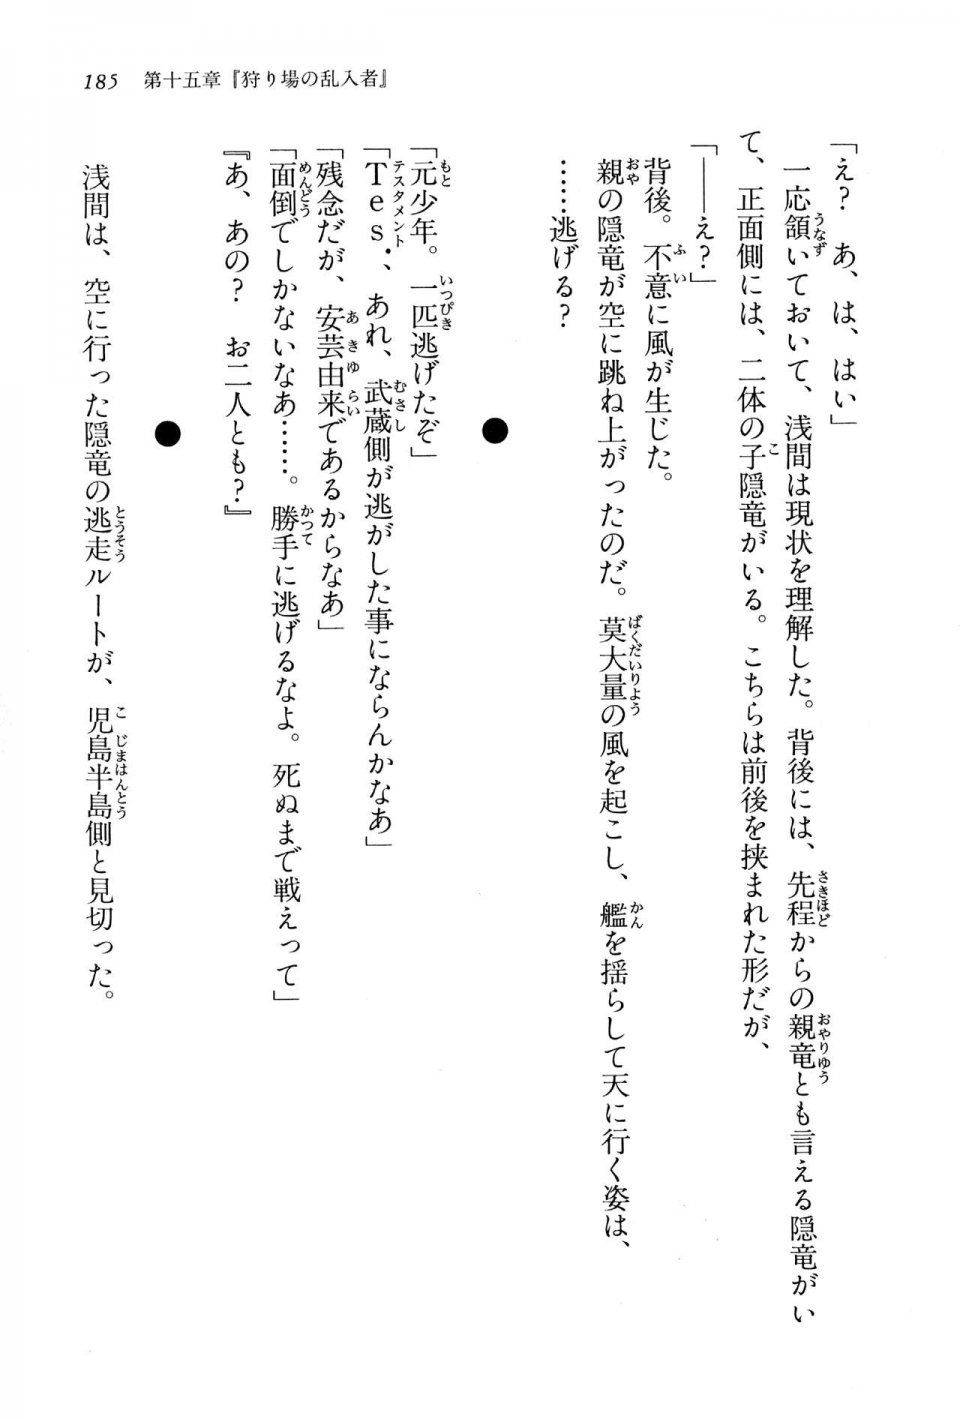 Kyoukai Senjou no Horizon BD Special Mininovel Vol 3(2A) - Photo #189